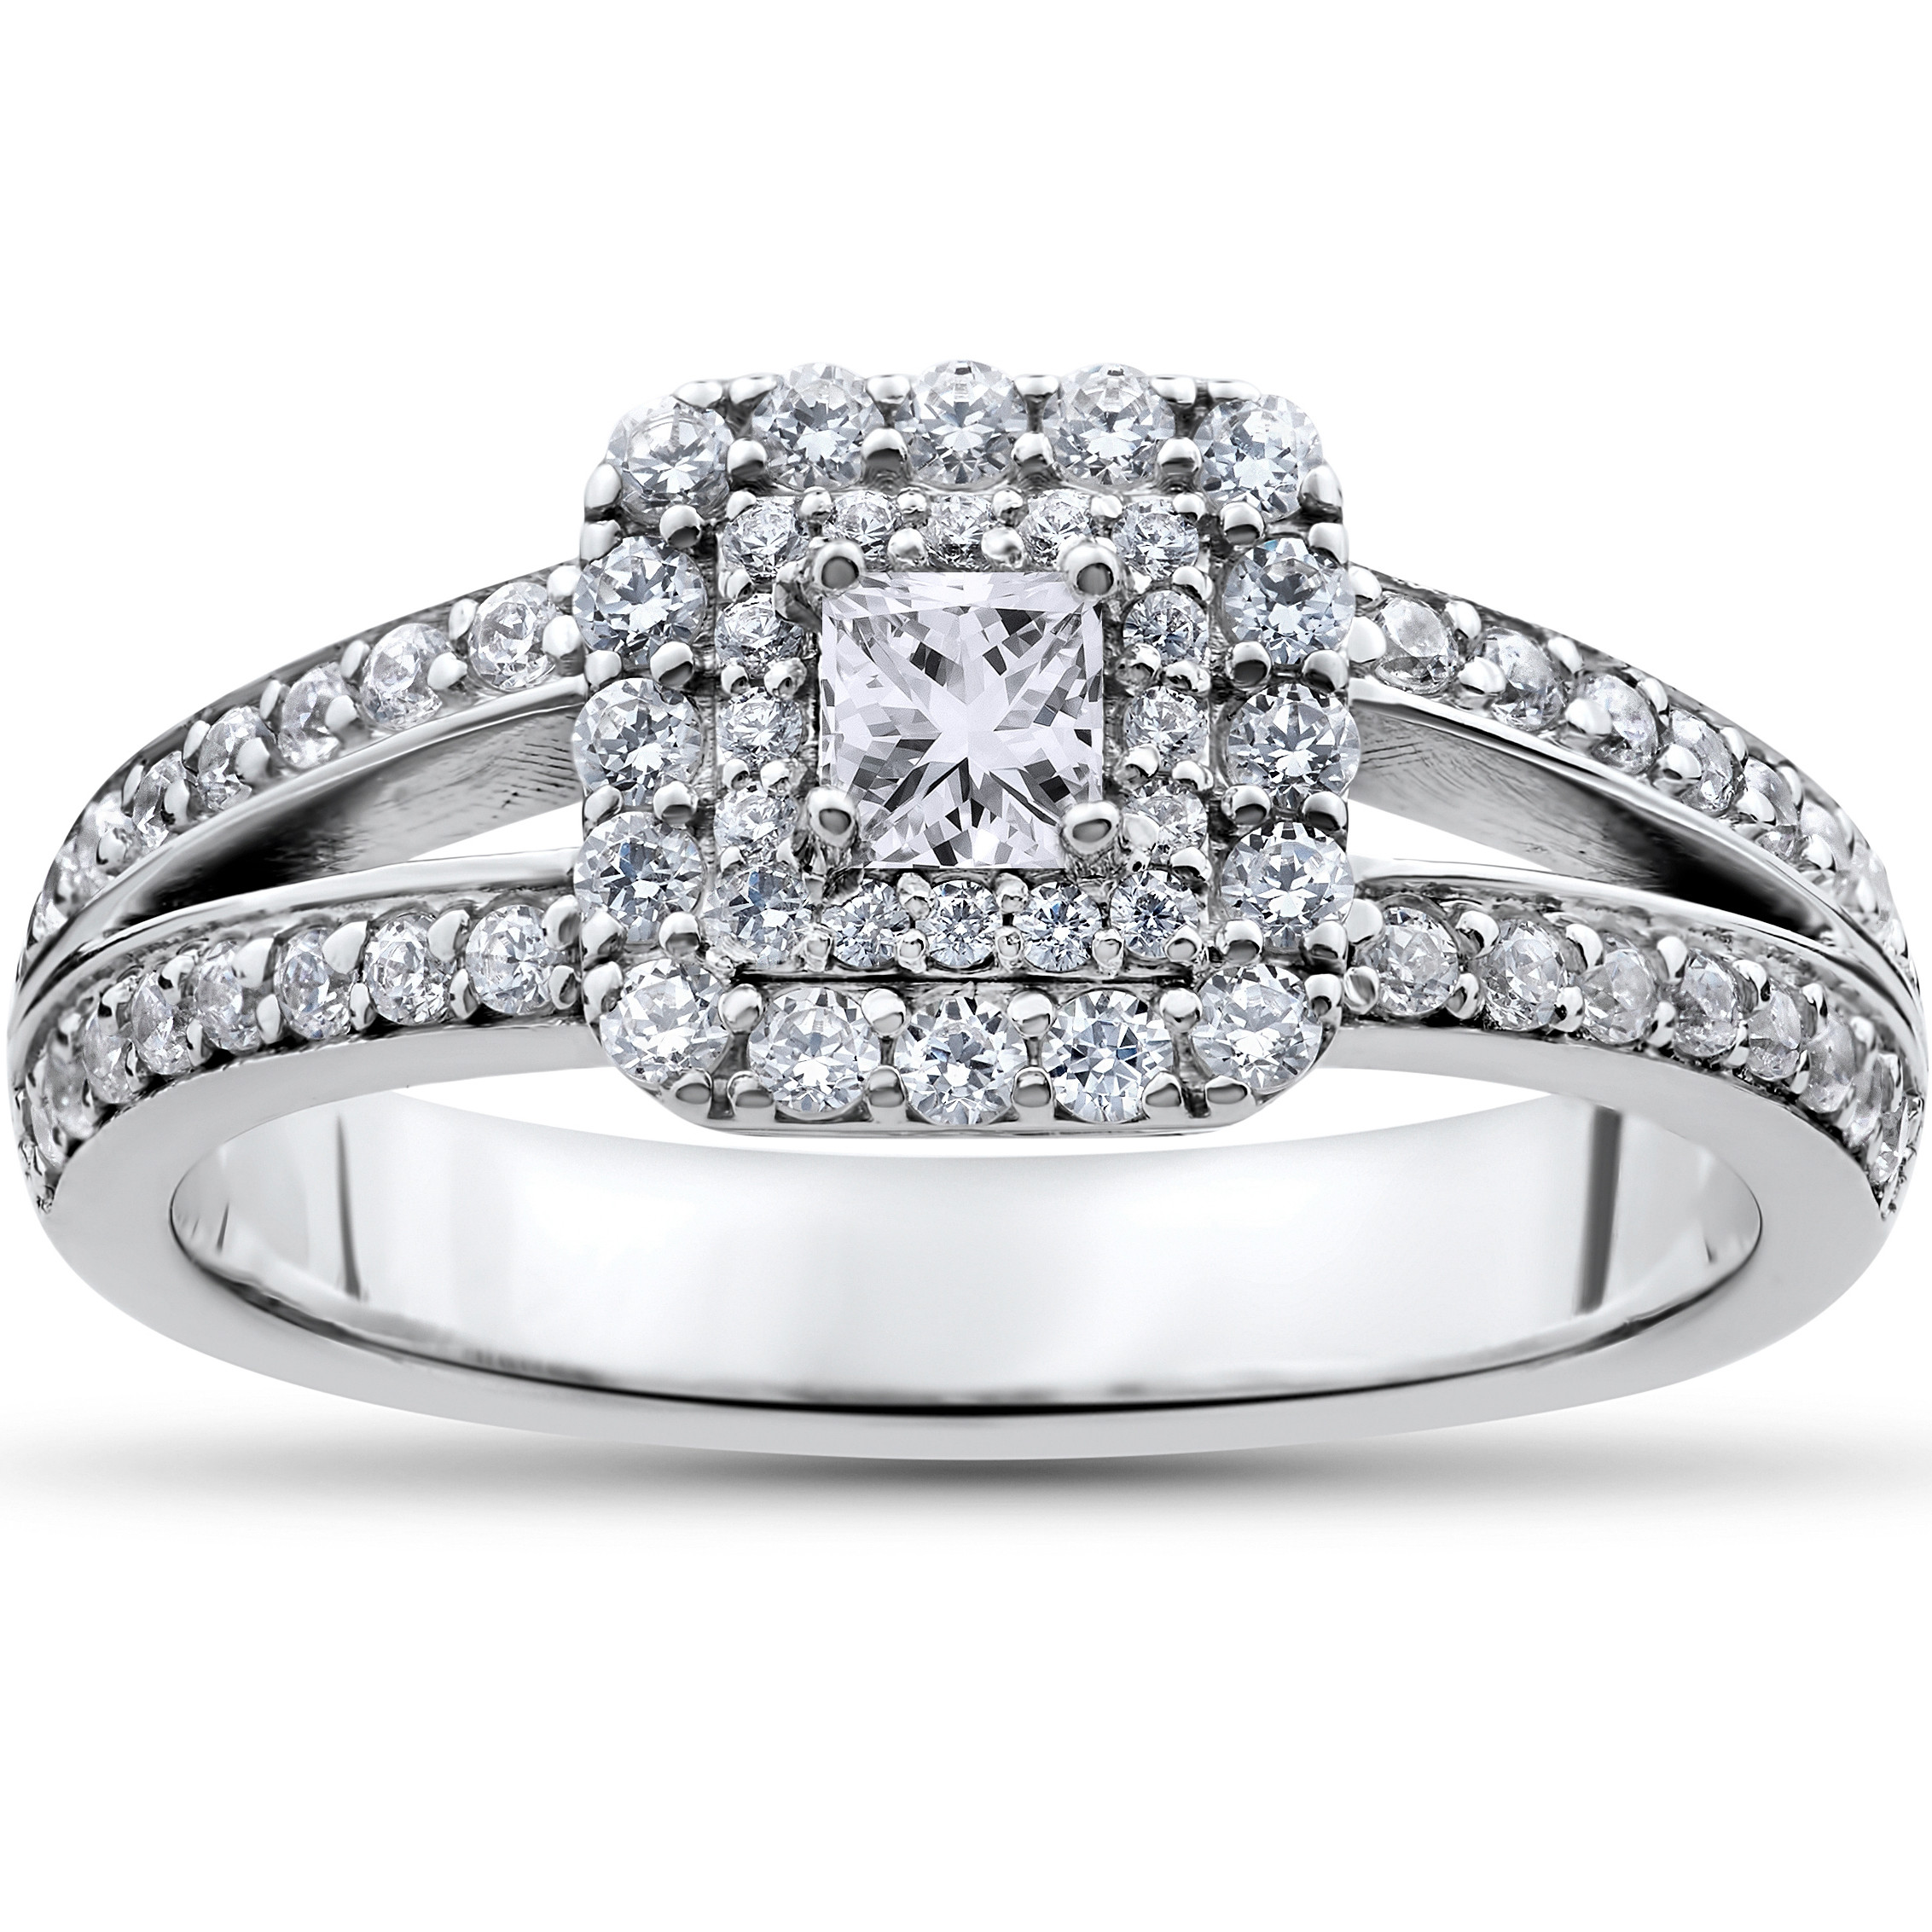 Princess Cut Diamond Engagement Rings White Gold
 1 ct Princess Cut Diamond Double Halo Engagement Ring 14k